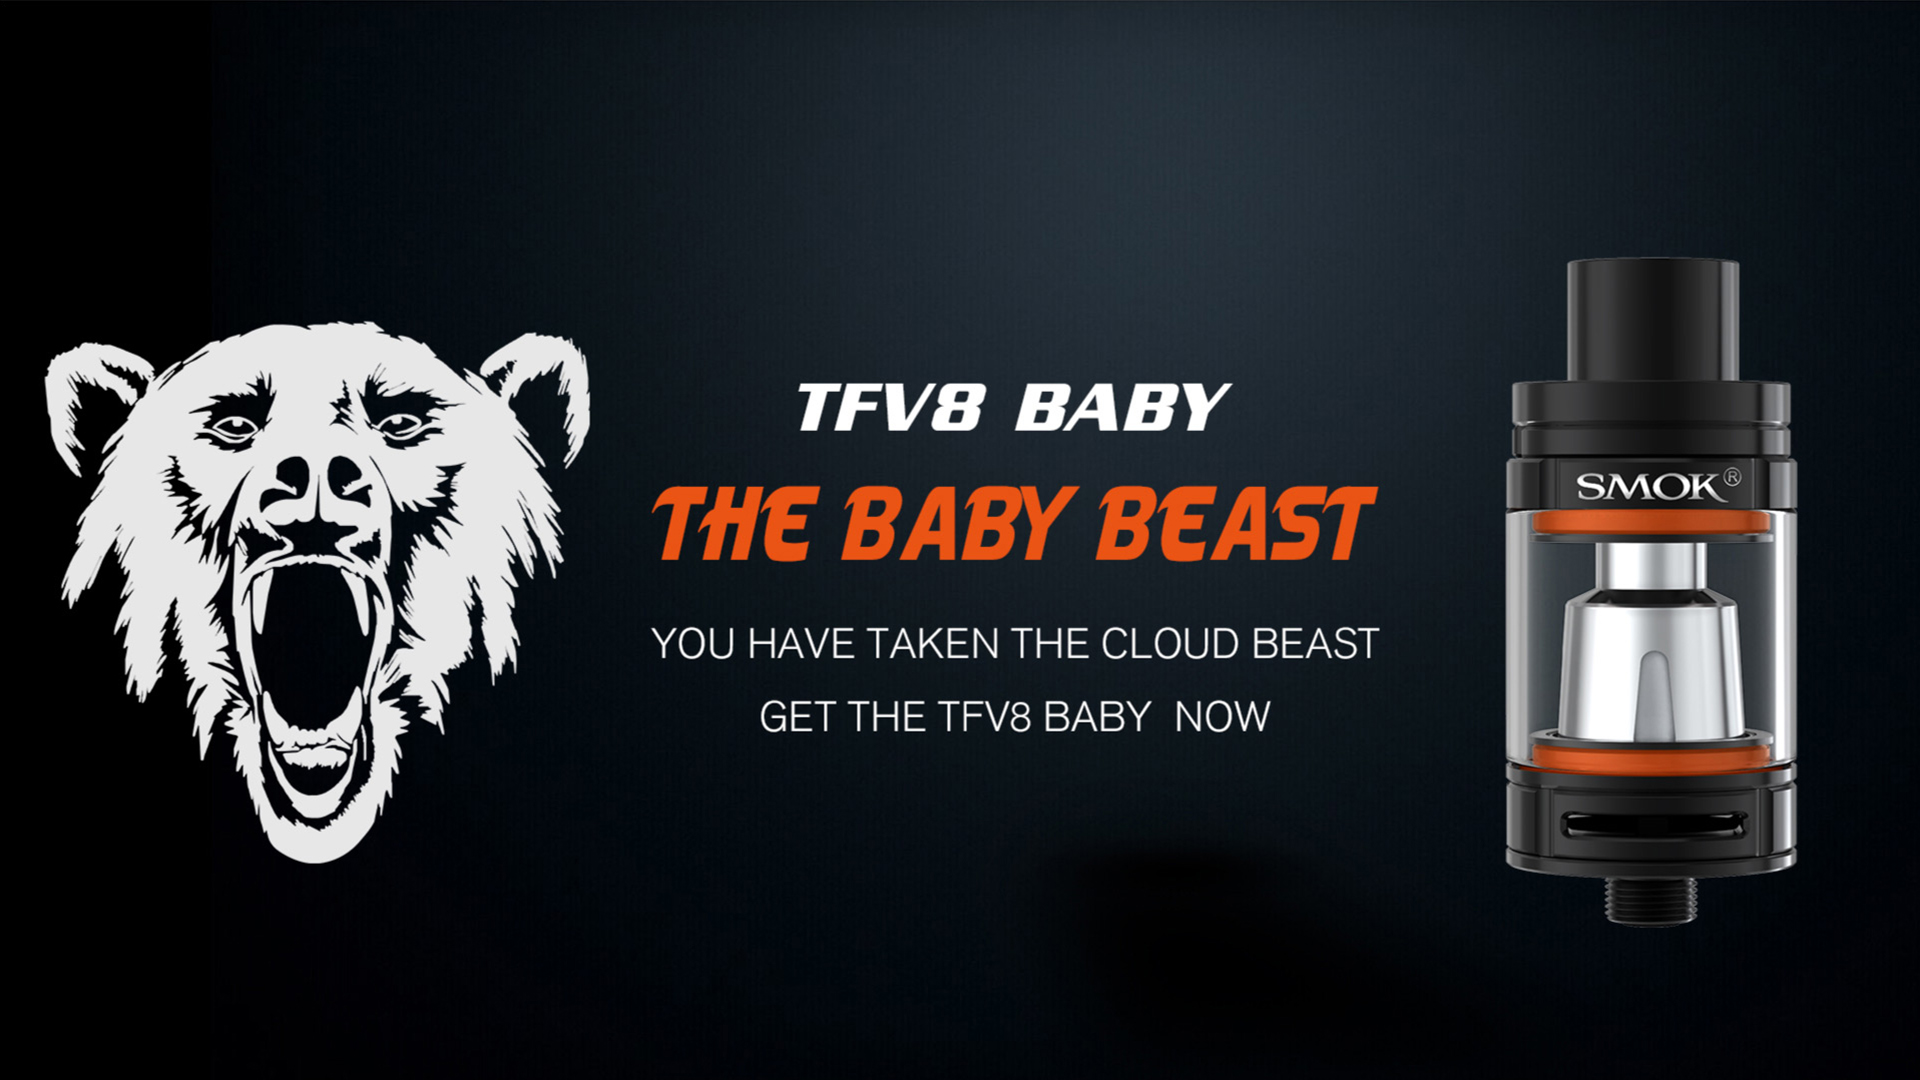 SMOK OSUB 80W Baby Kit - TFV8 Baby The Baby Beast